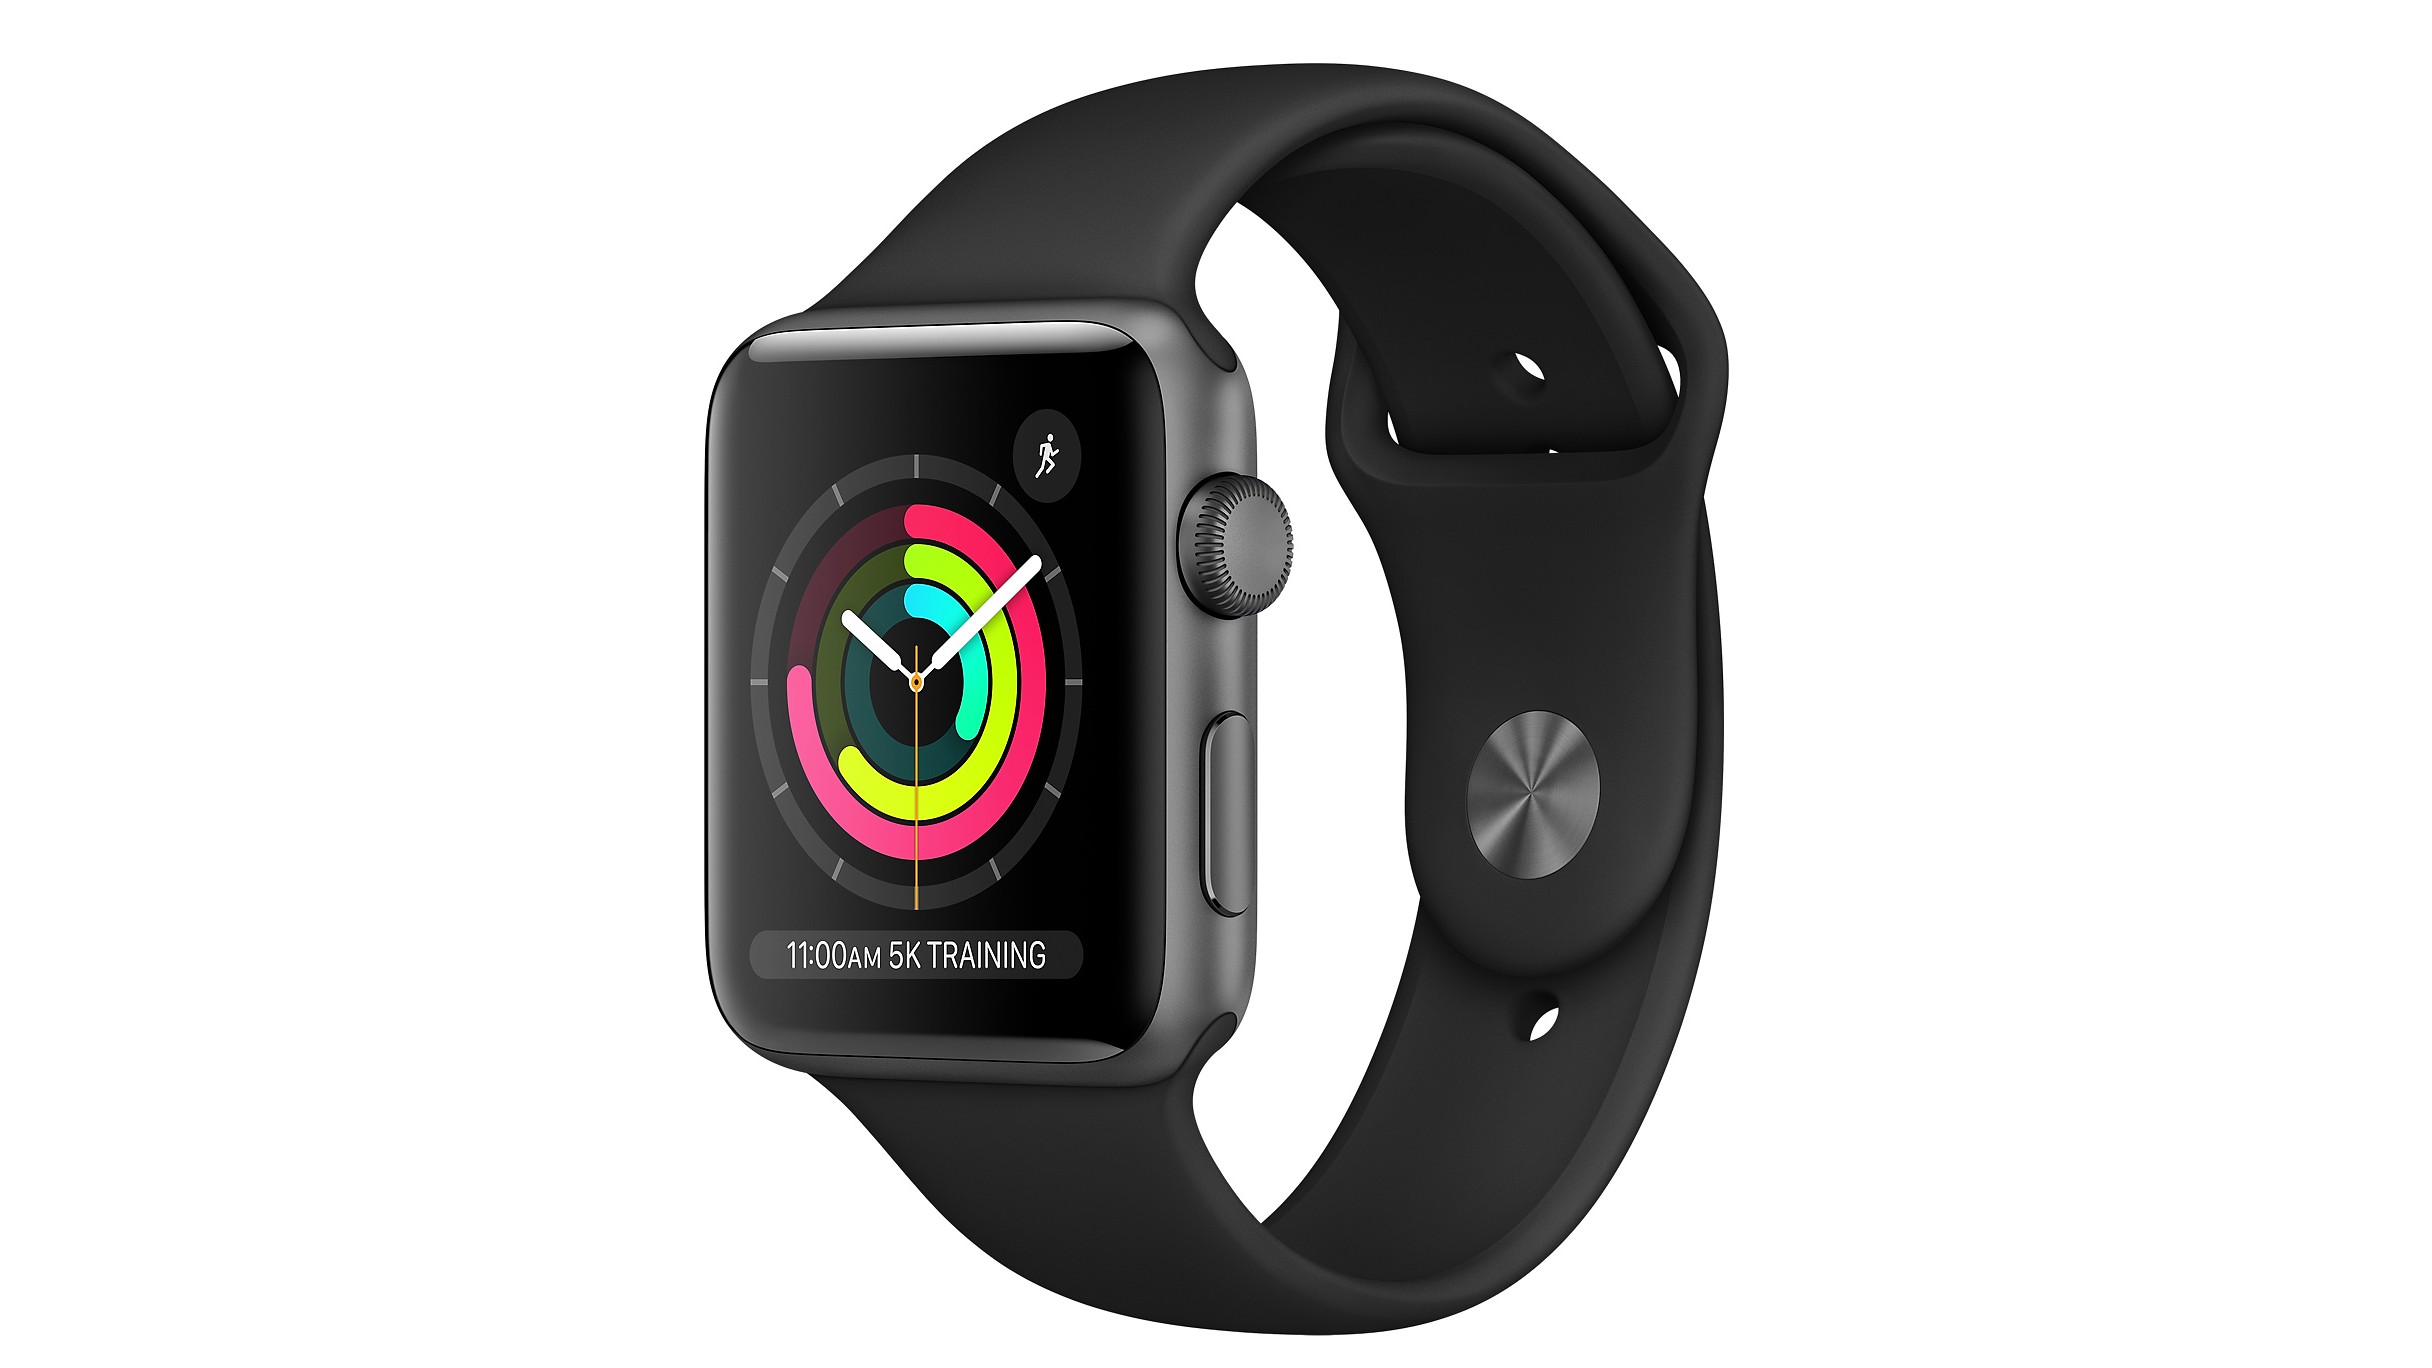 apple watch deals sales price: apple watch 3